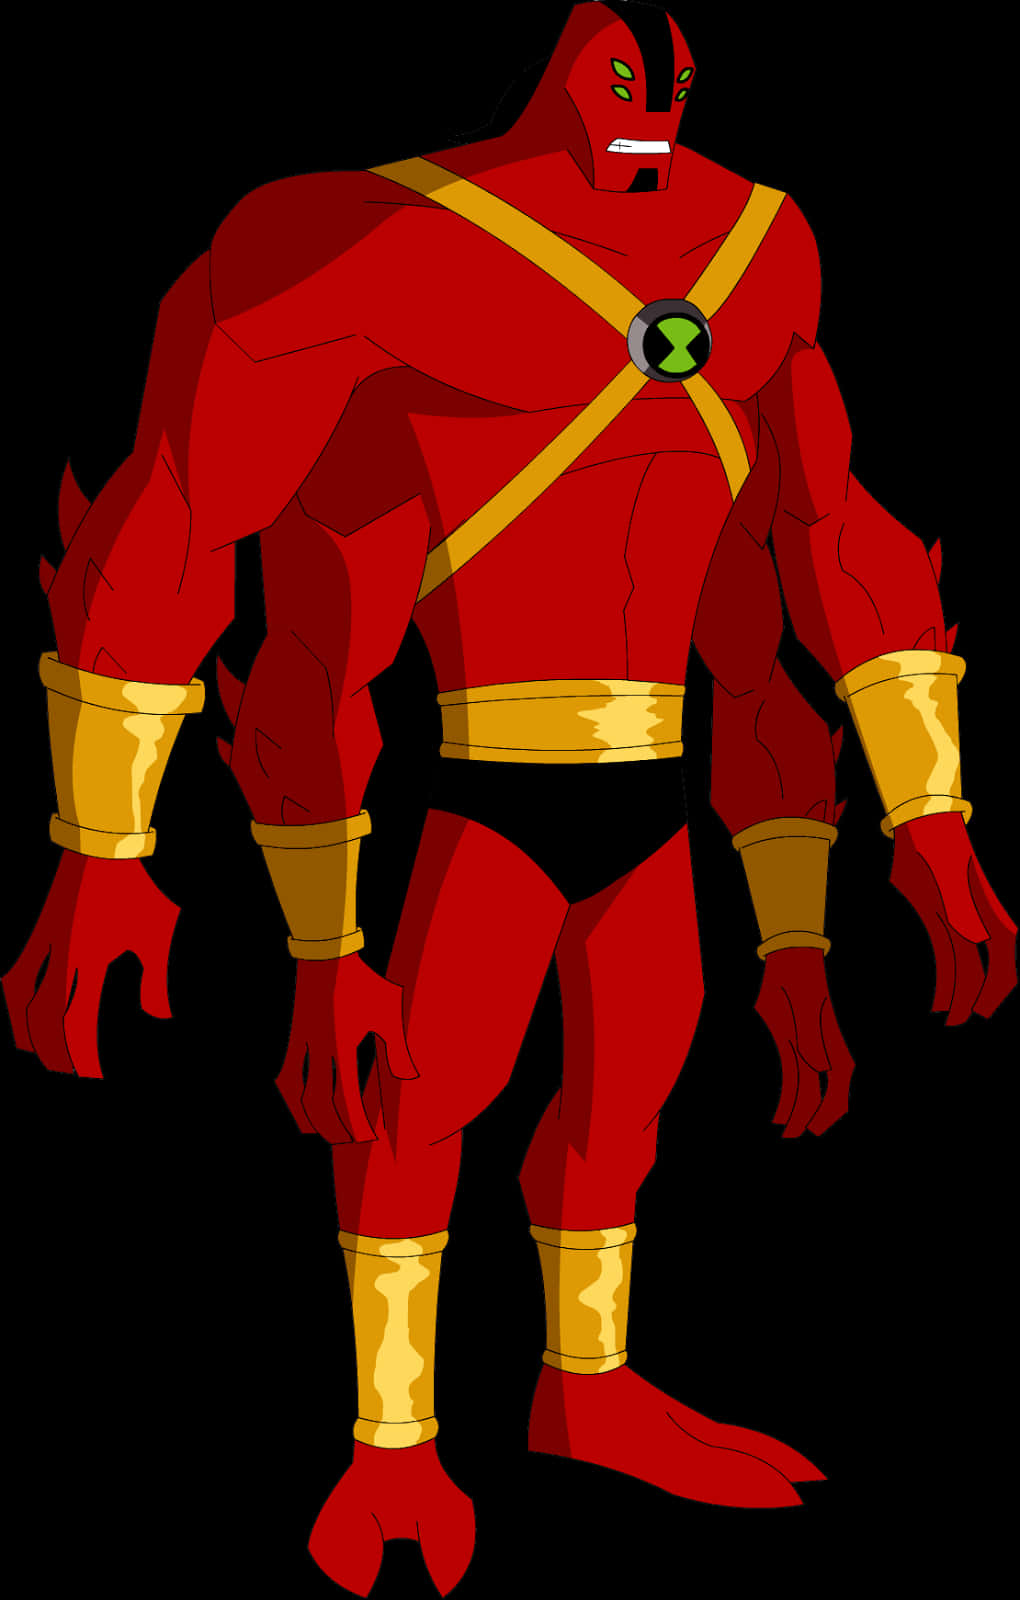 Cartoon Character Of A Superhero